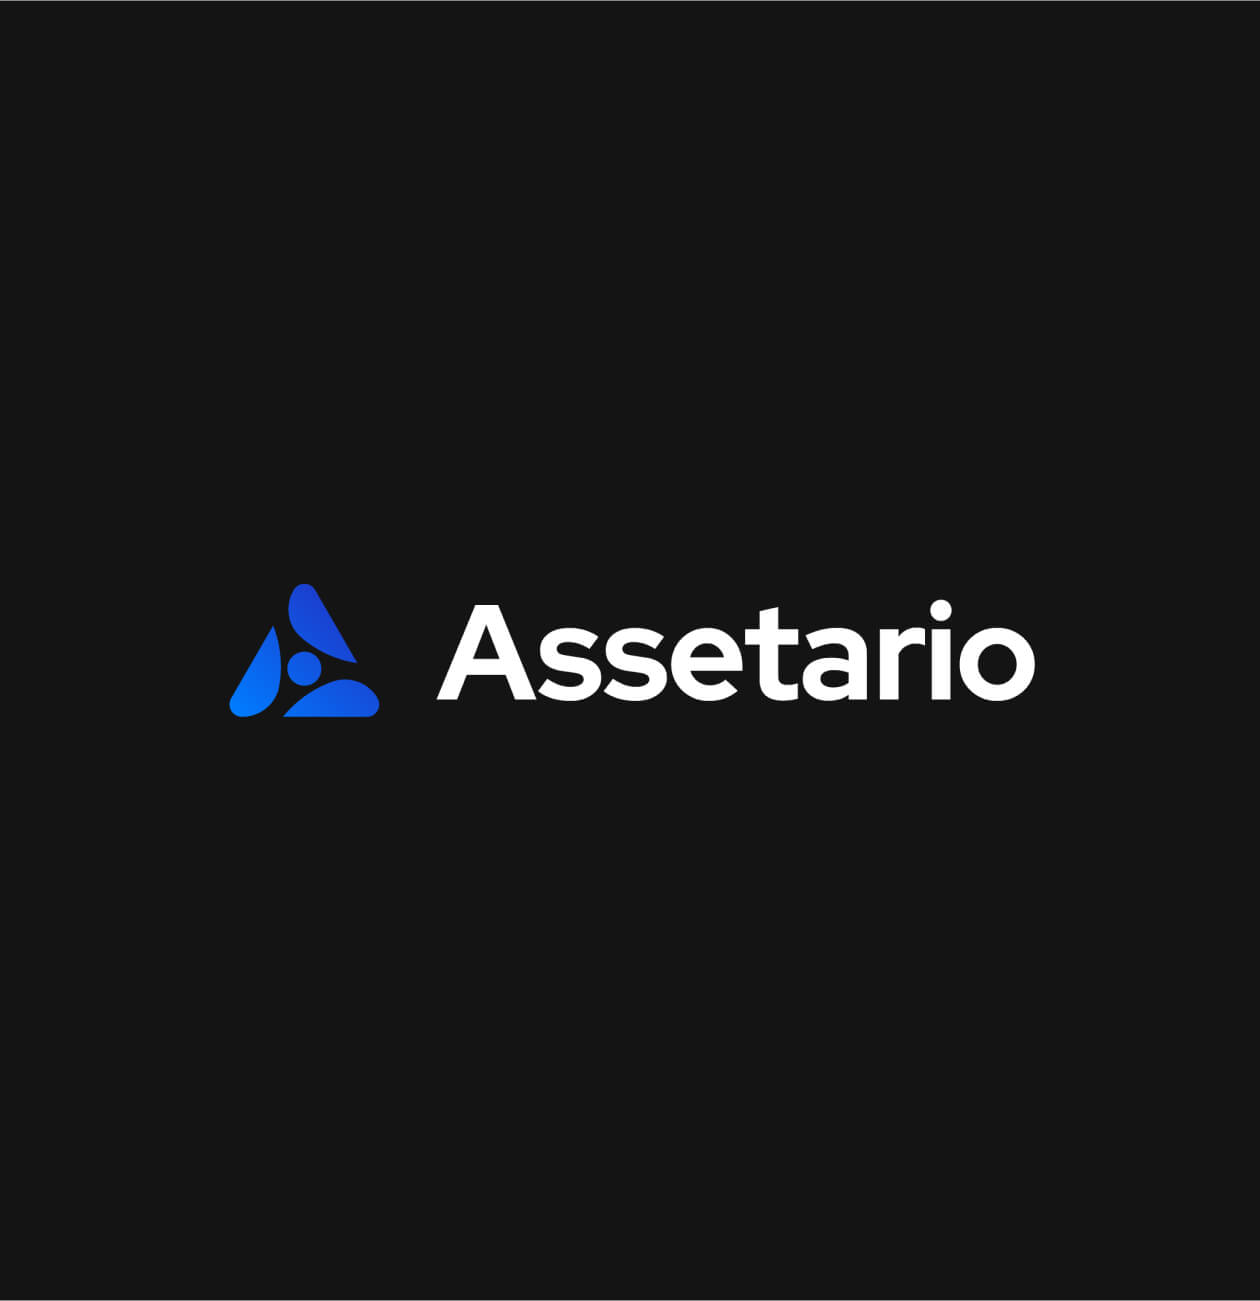 Assetario – Branding for the SaaS platform - Website Development - Photo 2